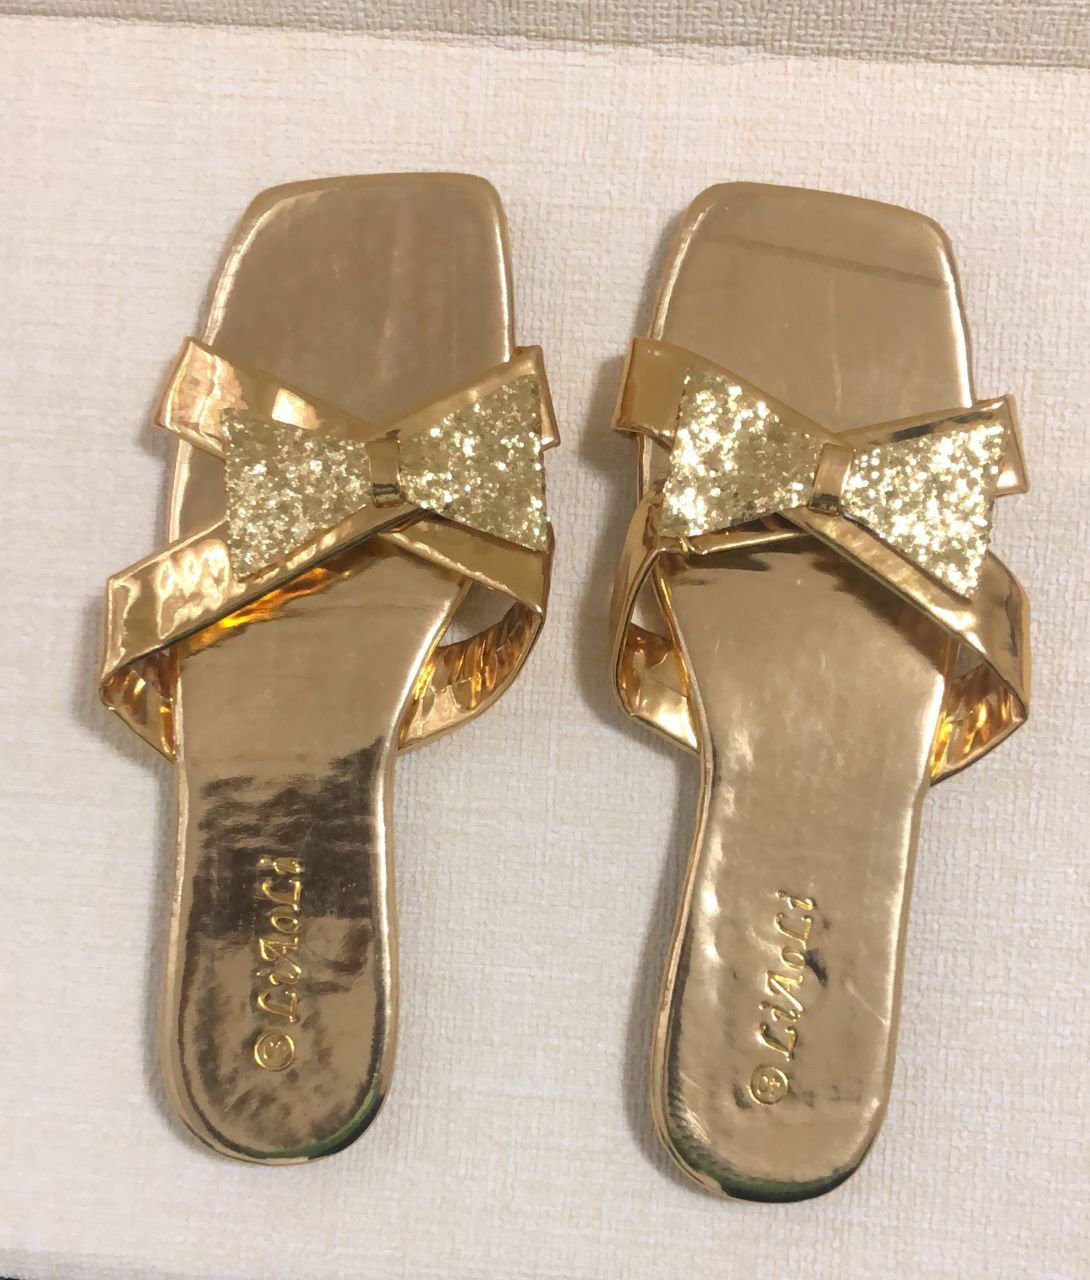 Sparkling Crystal GOLD Flat Sandals - Elegant Comfort for Any Occasion
